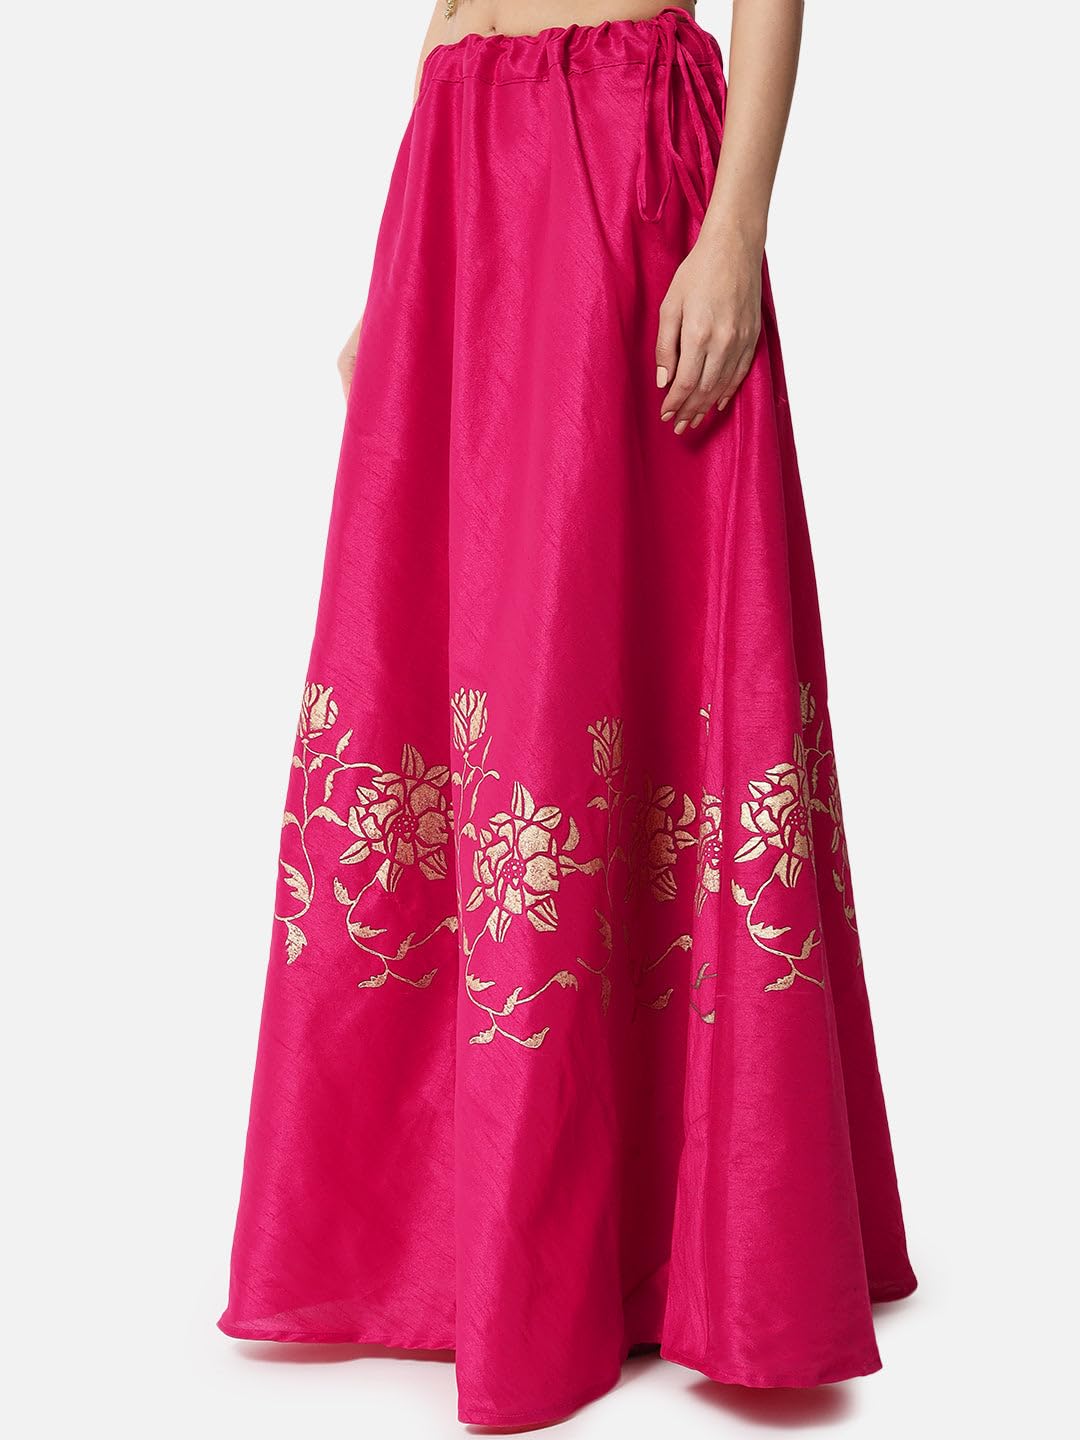 studio rasa Women's Dupion Hand Block Printed Bias Skirt for Wedding Festive (Pink)